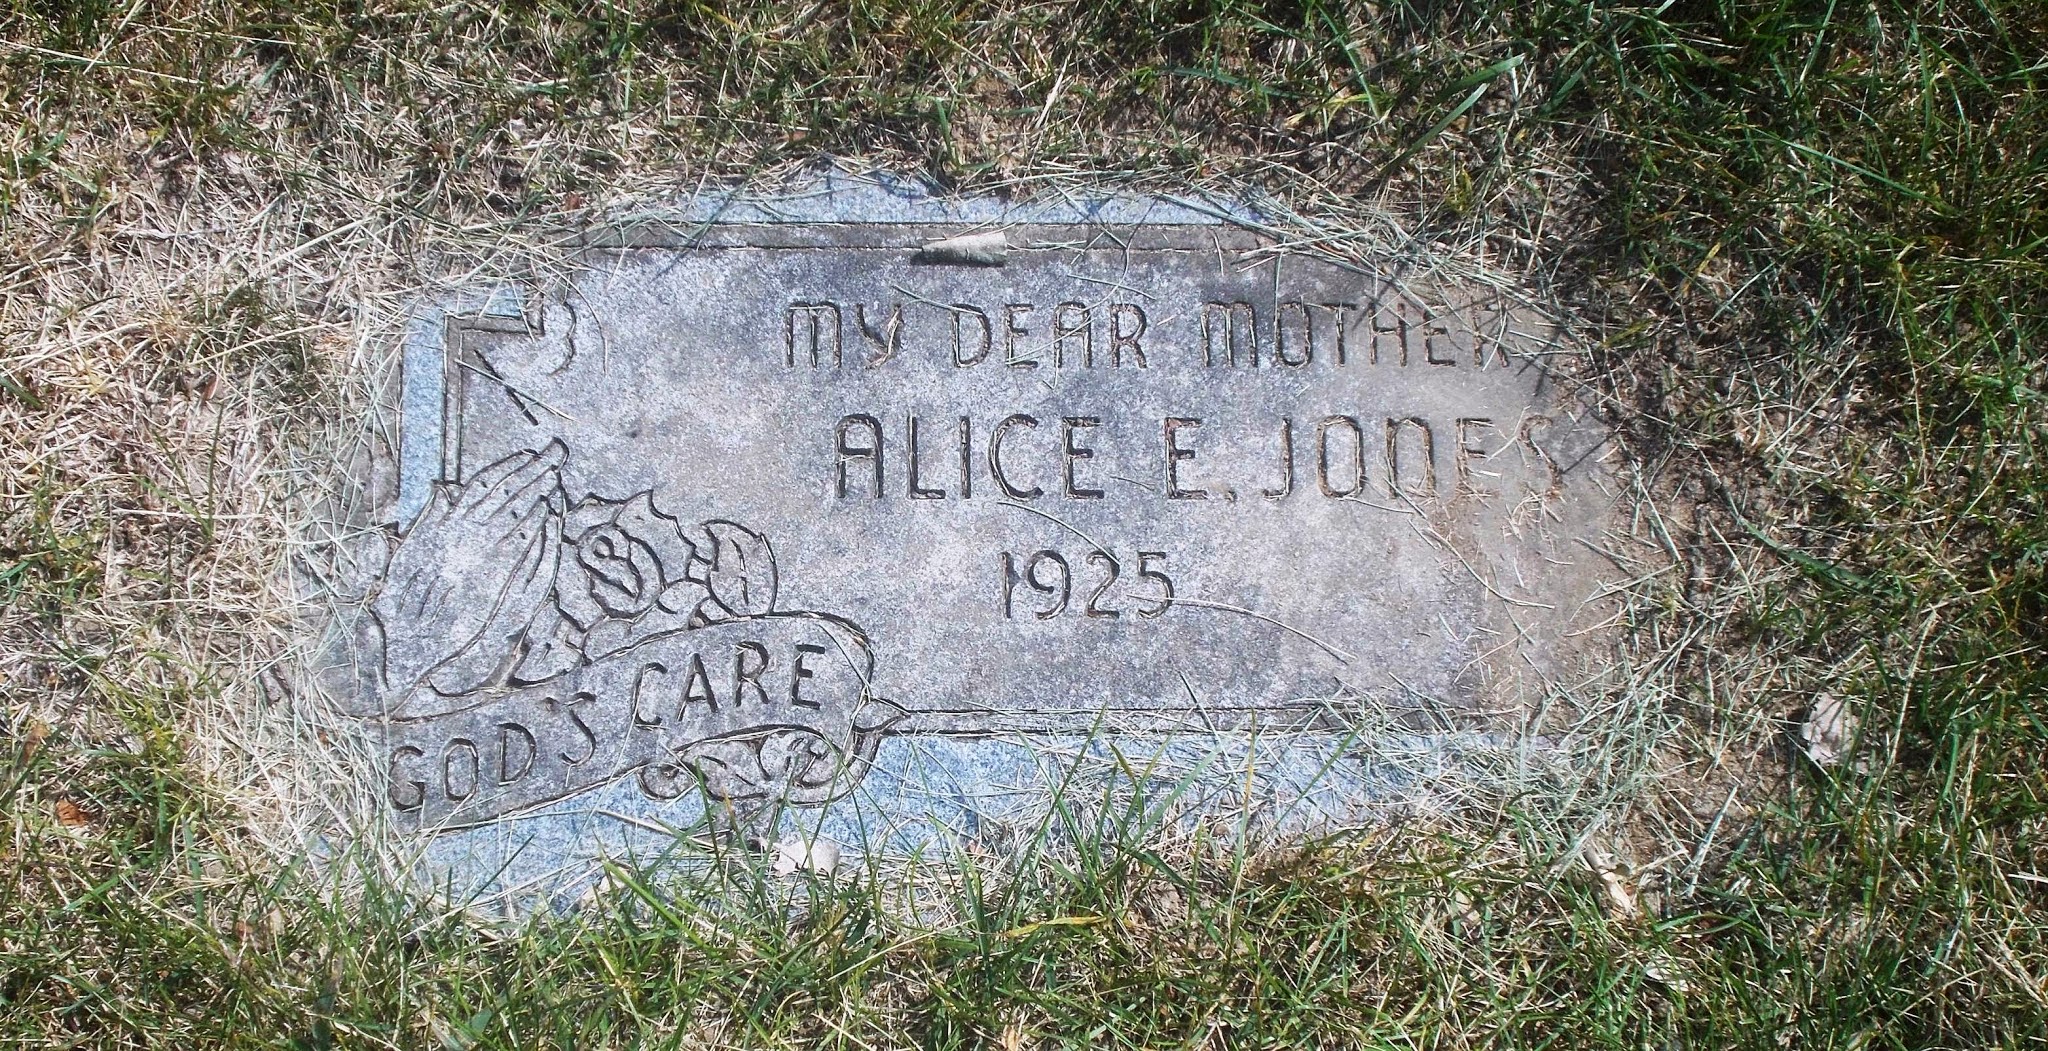 Alice E Jones